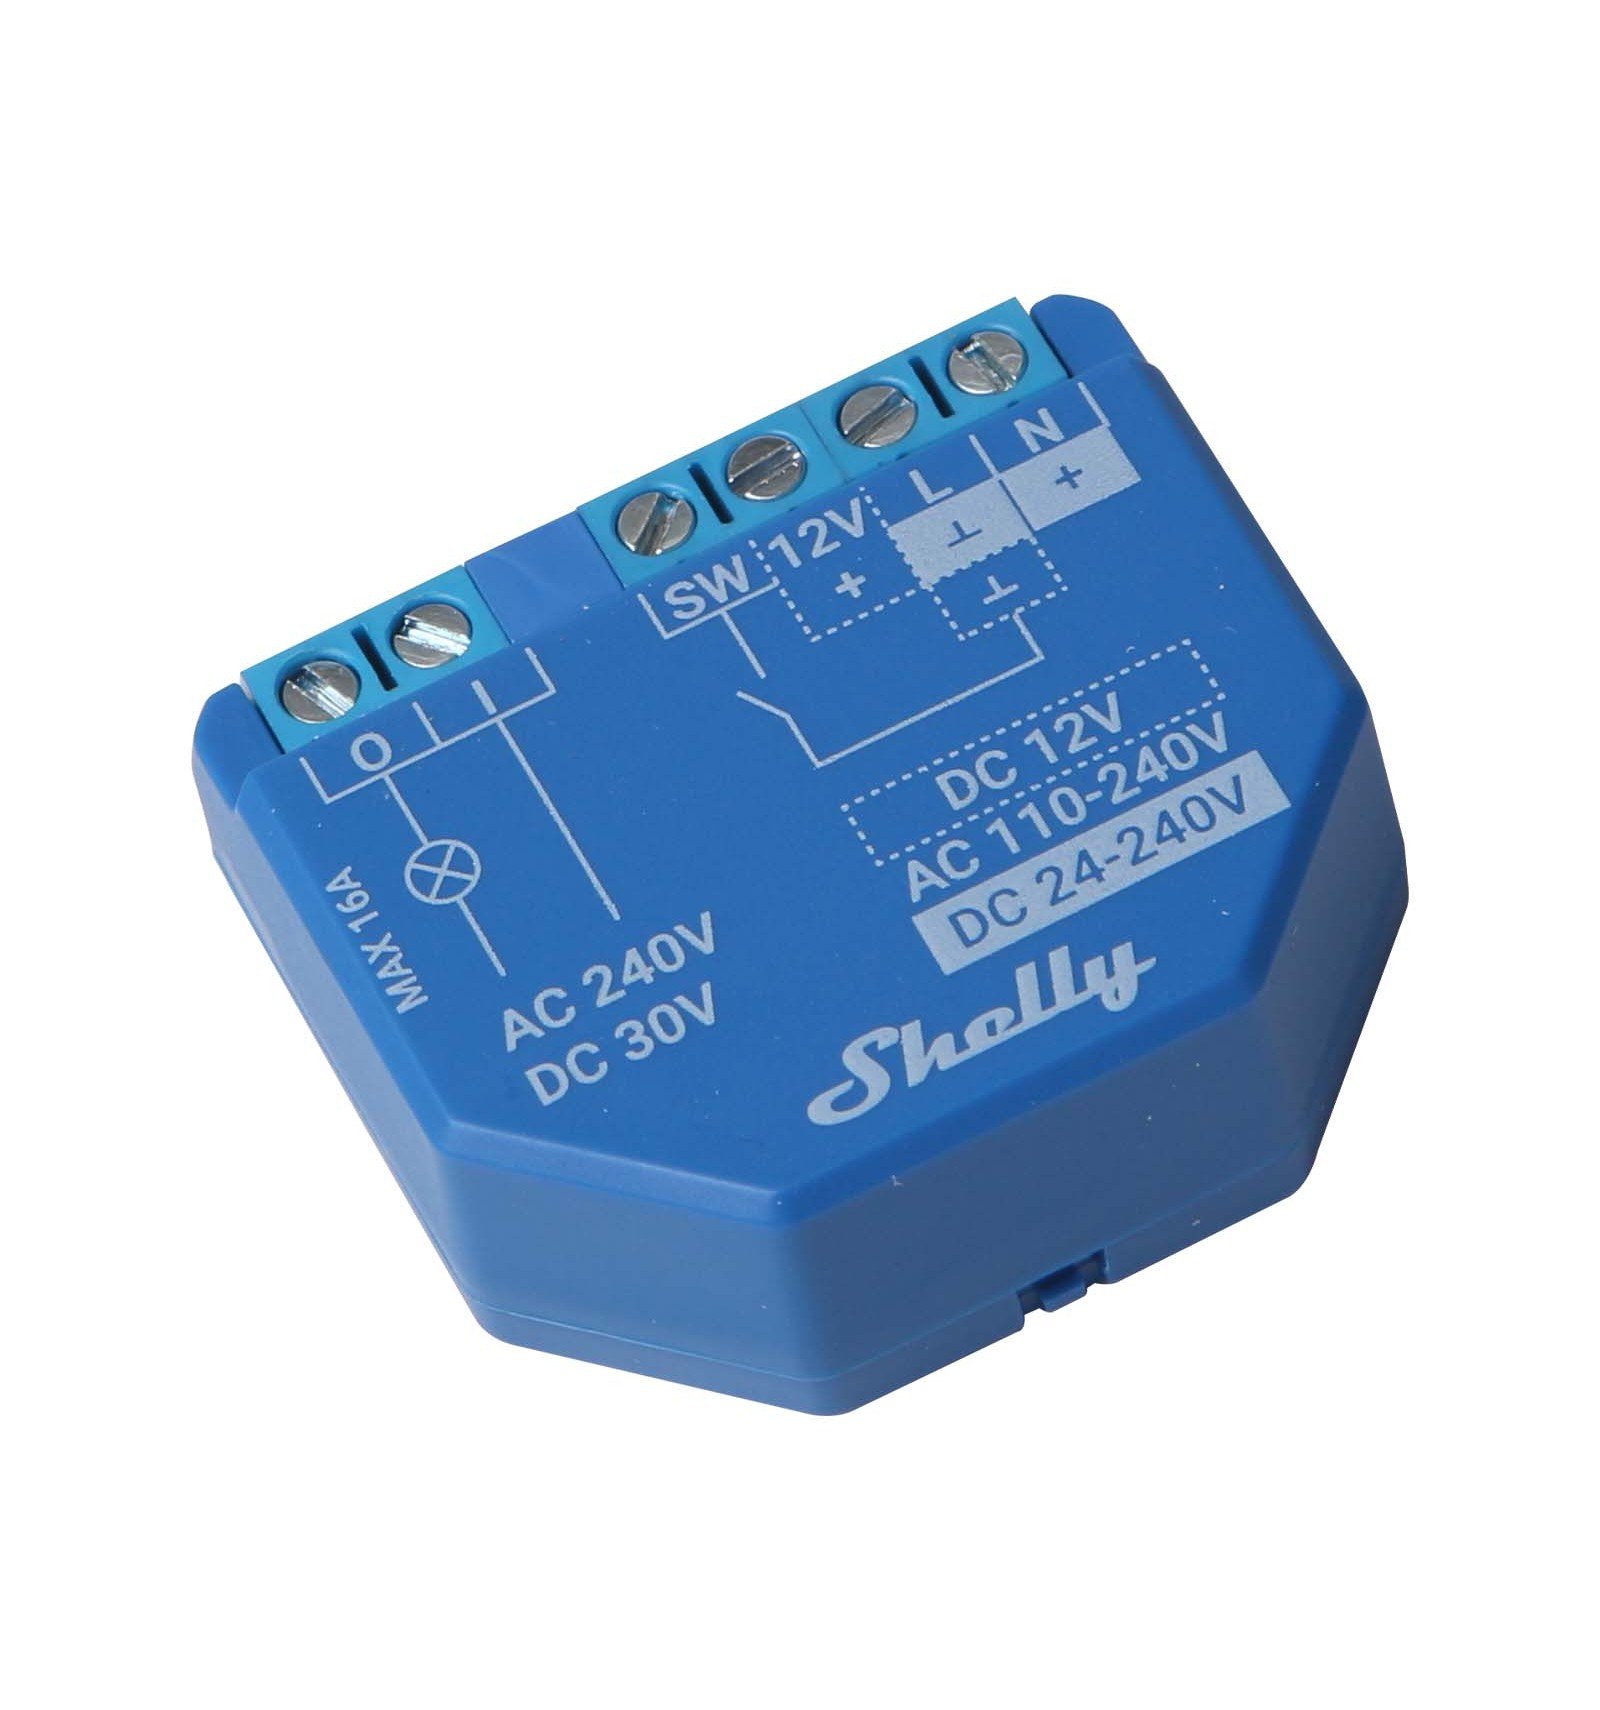 Shelly Plus 1 Mini, WiFi & Bluetooth Smart Switch Relay, 1 Channel 8 A